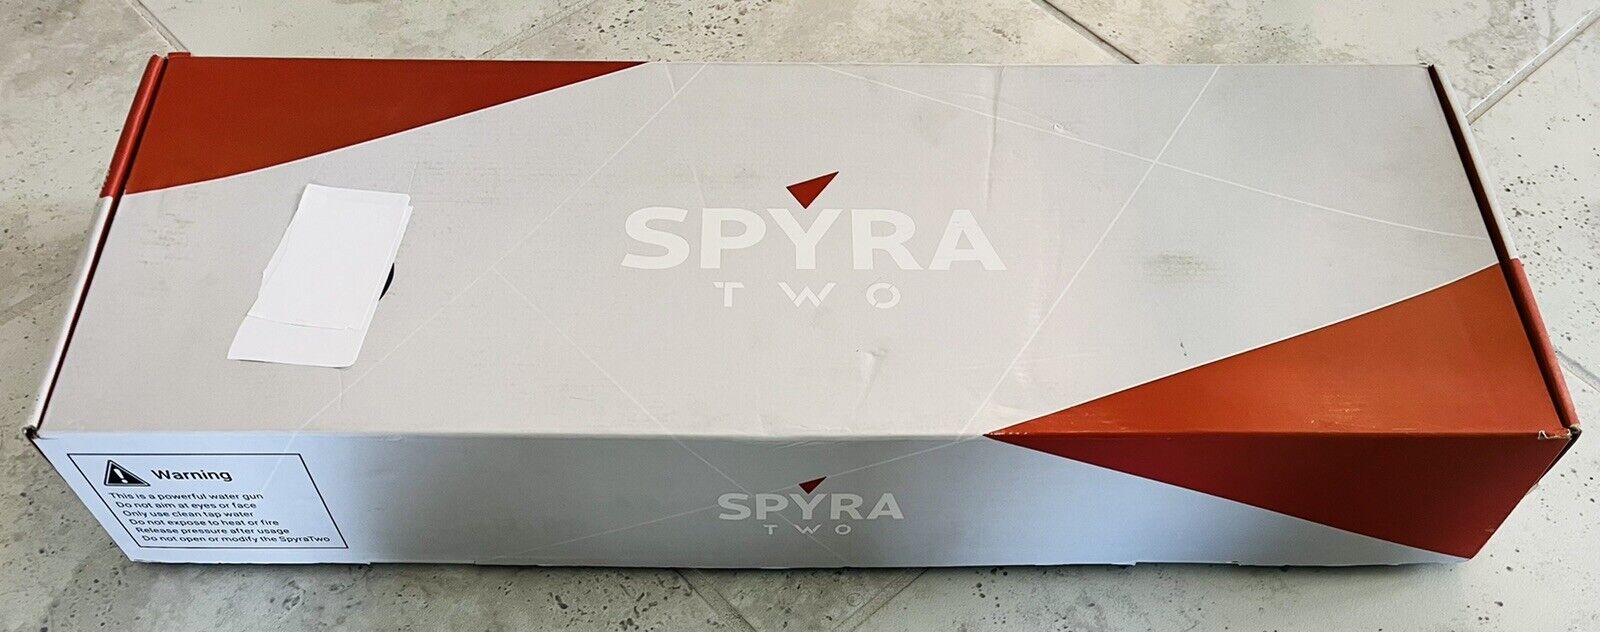 Spyra Two Water Gun - Shut Up And Take My Money